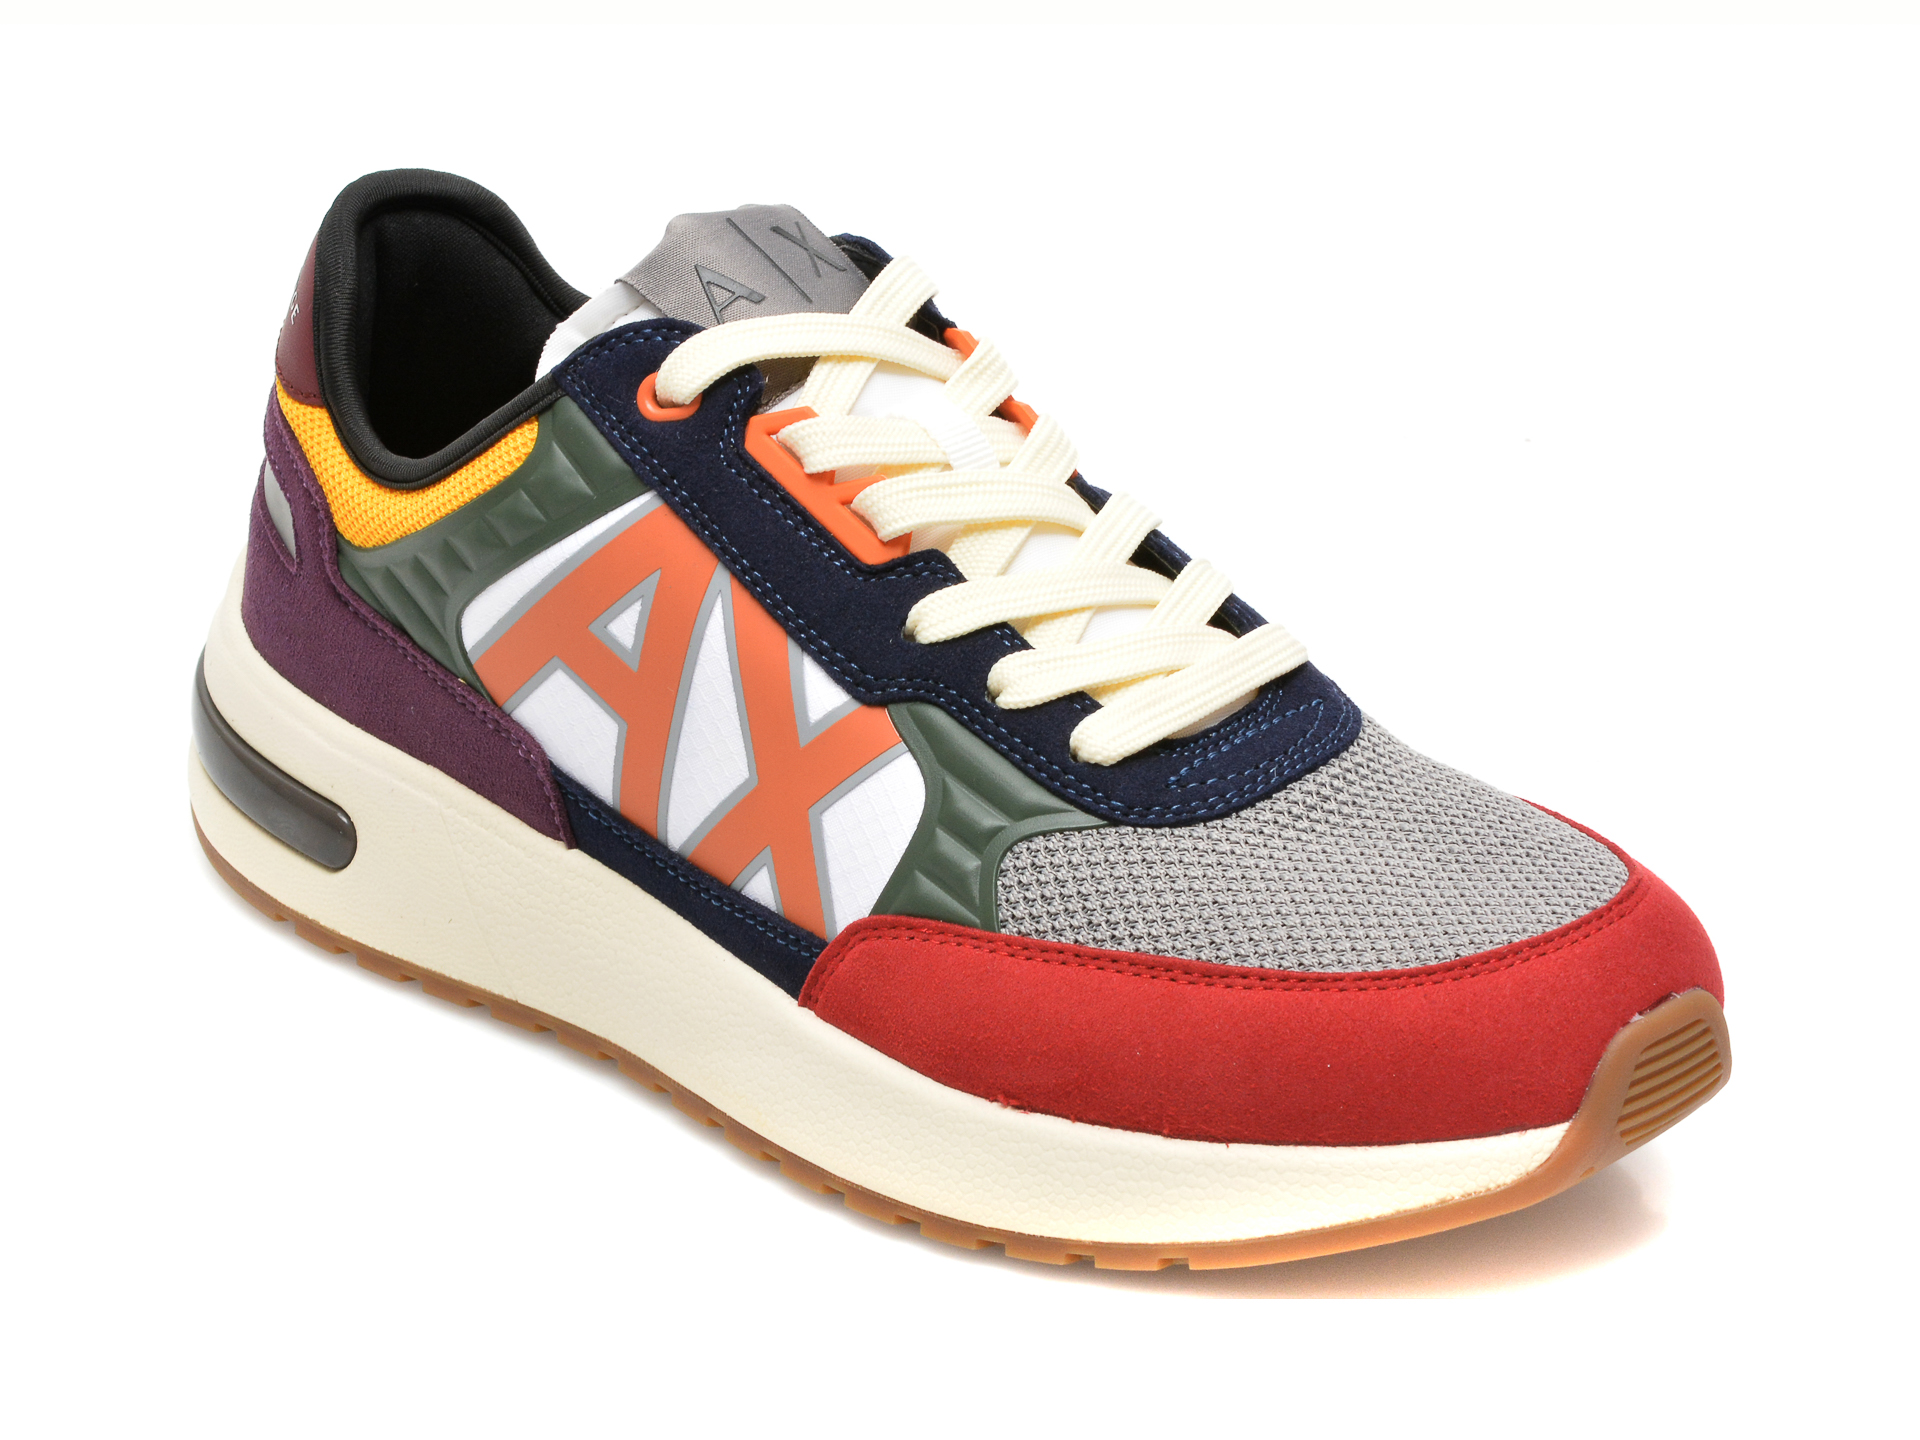 Pantofi sport ARMANI EXCHANGE multicolori, XUX090, din material textil si piele ecologica Armani Exchange